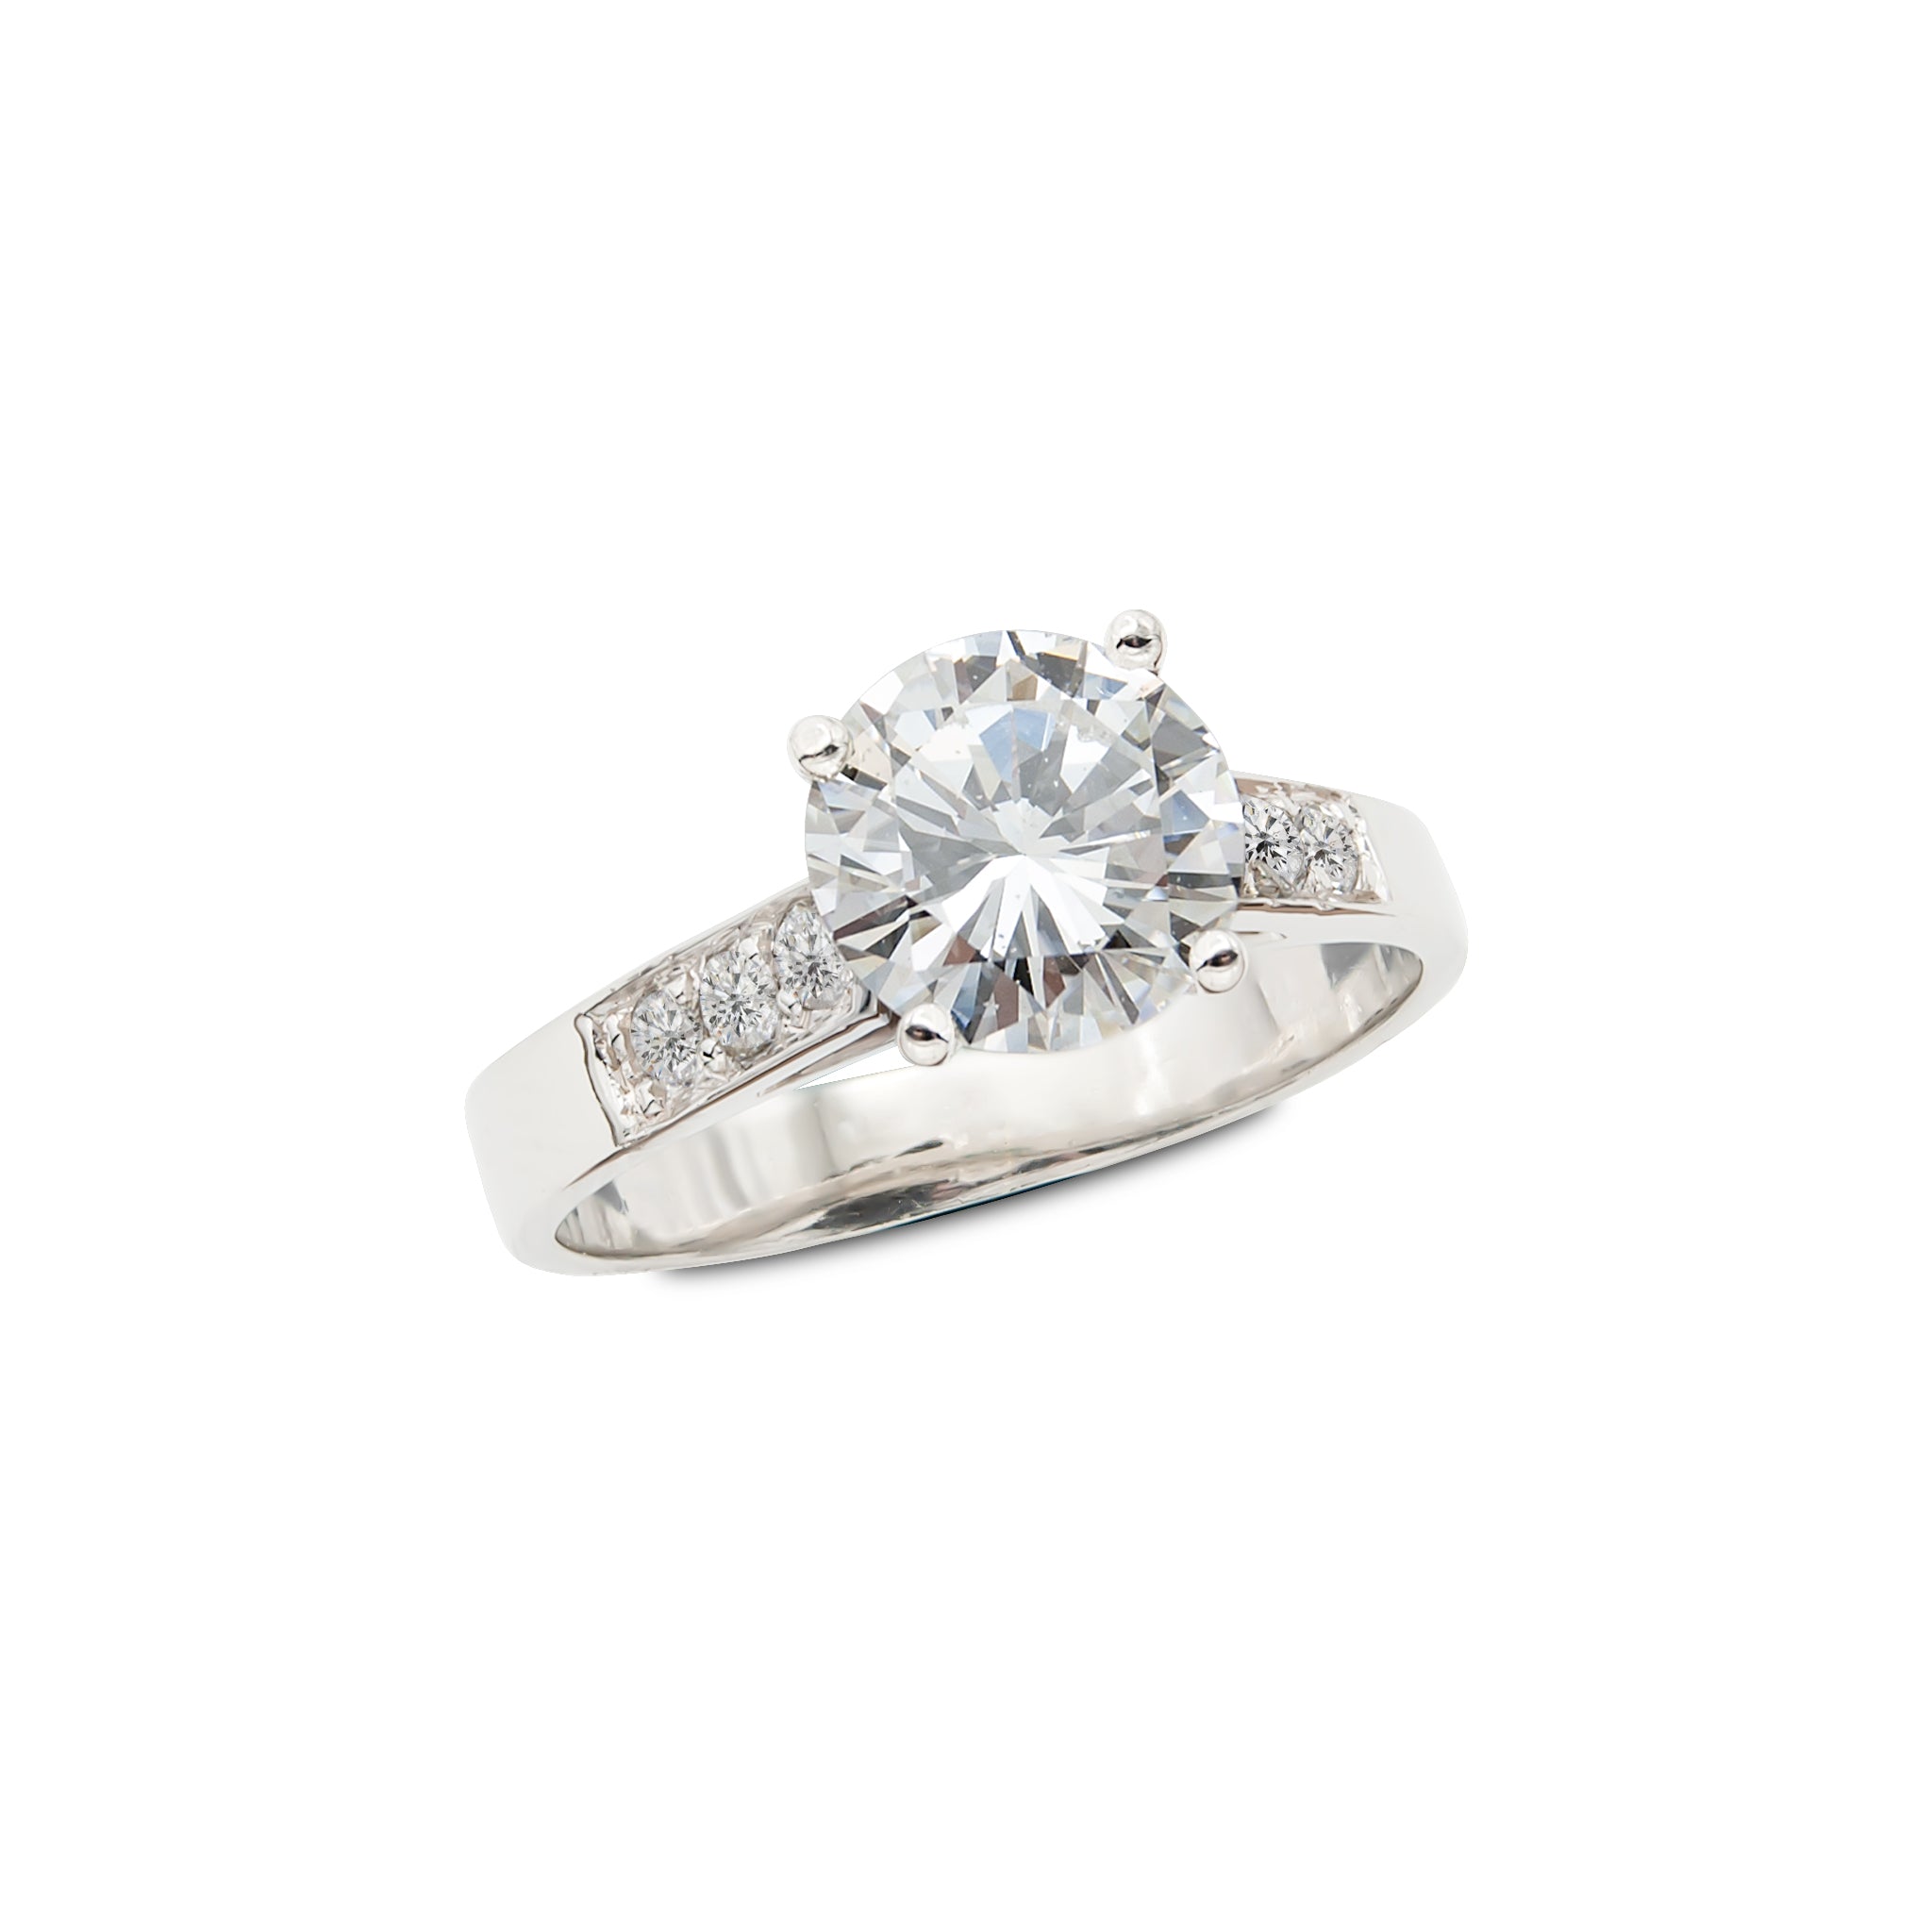 4 Carat Princess Cut Diamond Ring Guide